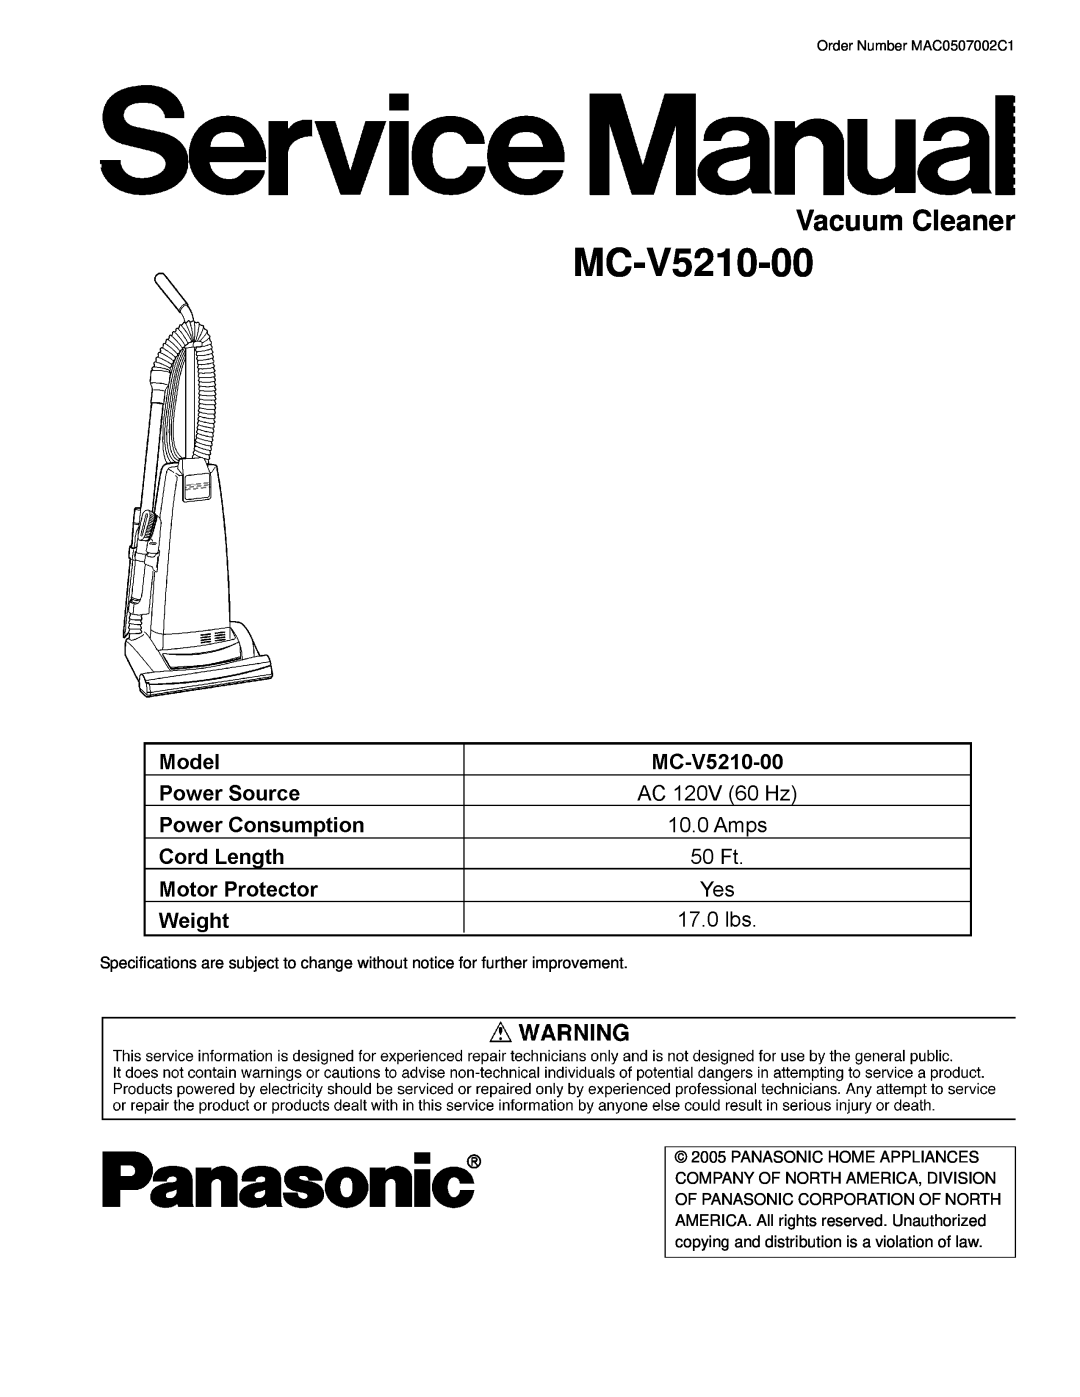 Panasonic MC-V5210-00 specifications Vacuum Cleaner 